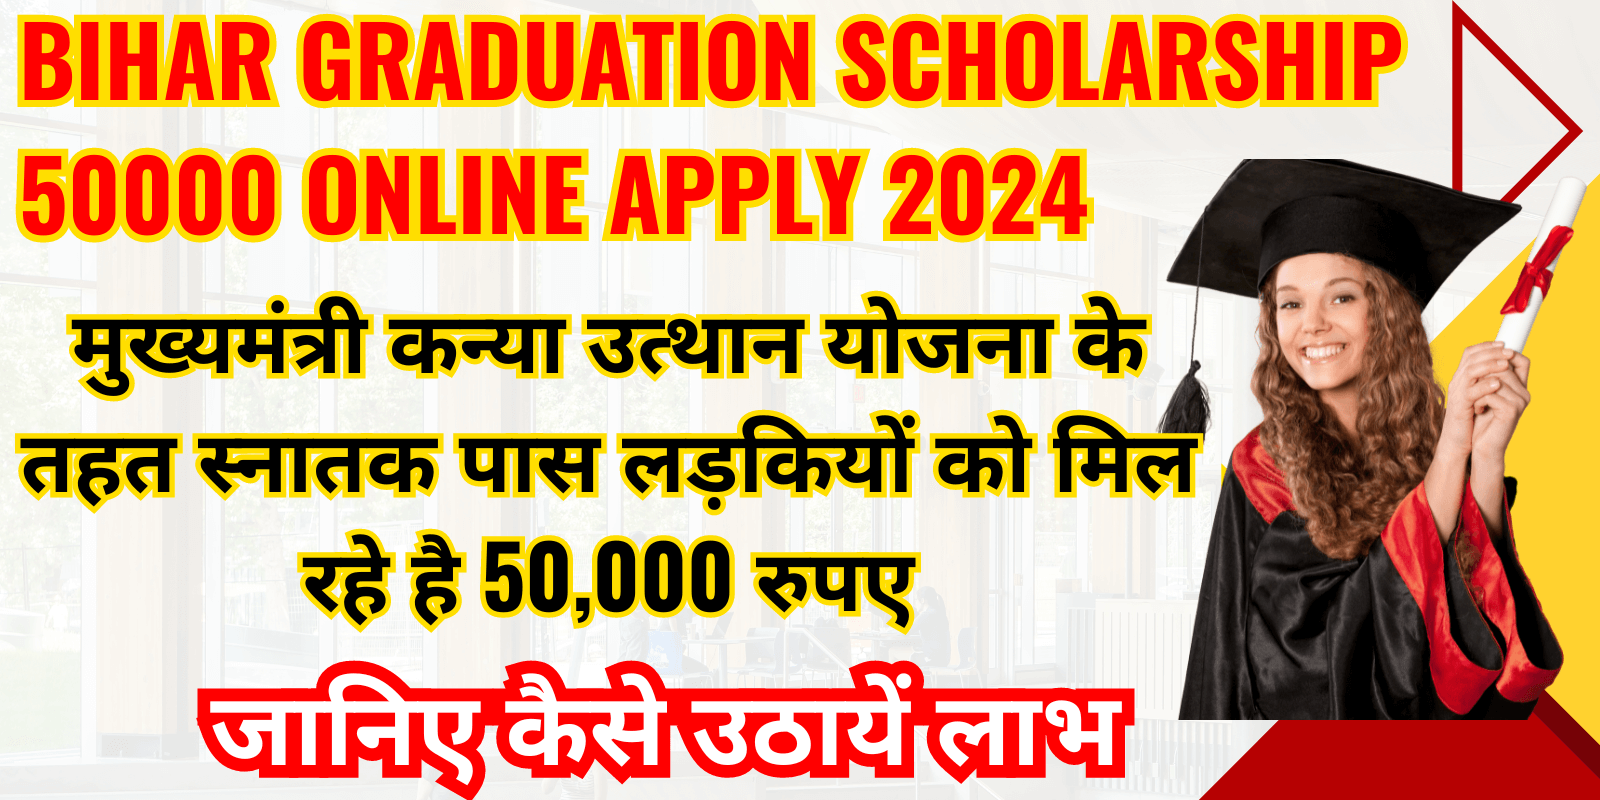 bihar graduation scholarship 50000 online apply 2024